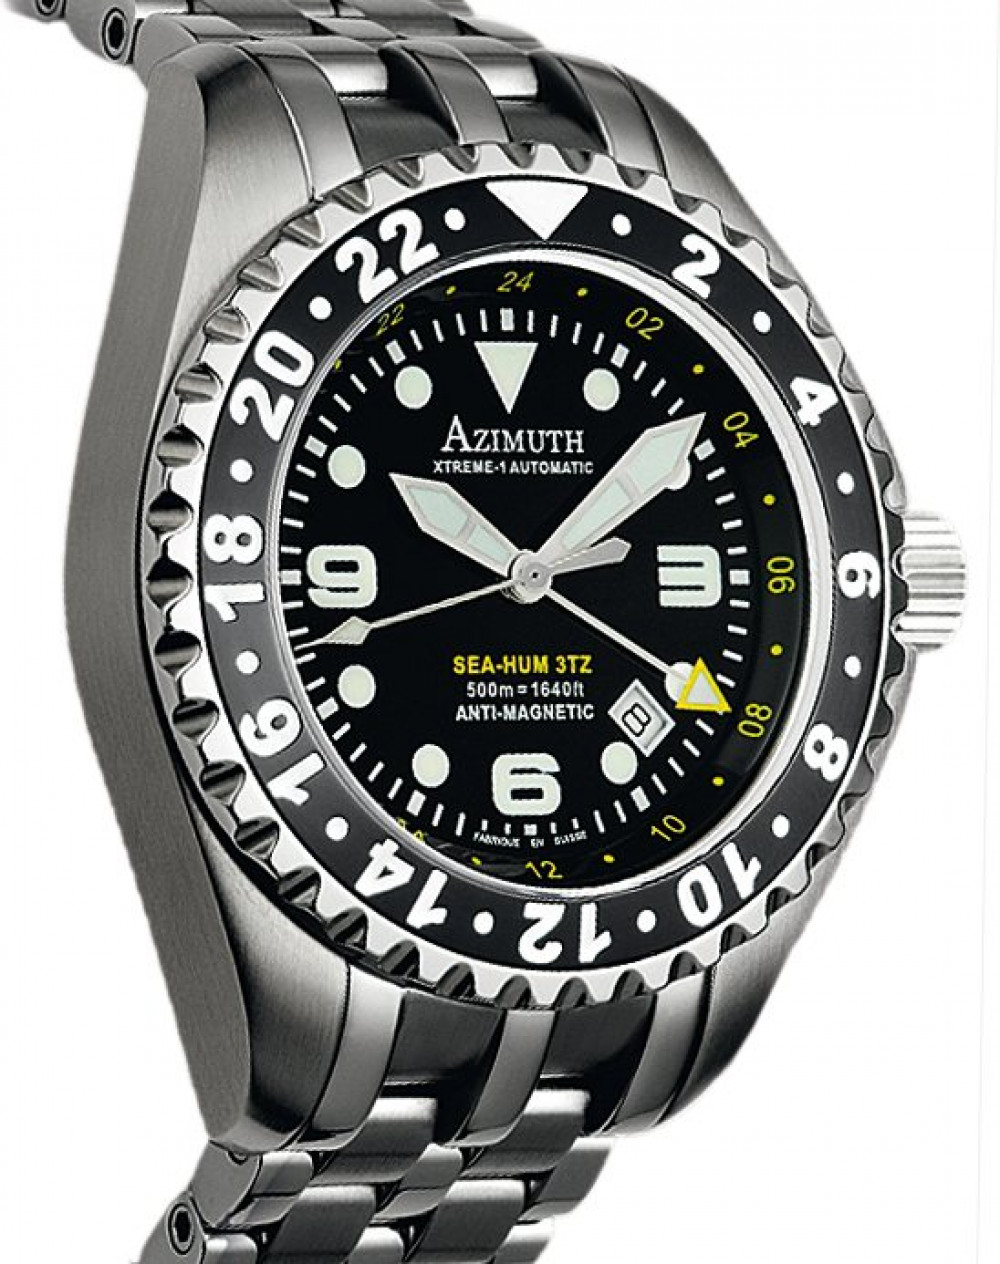 Zegarek firmy Azimuth, model Xtreme-1 Sea-Hum 3TZ